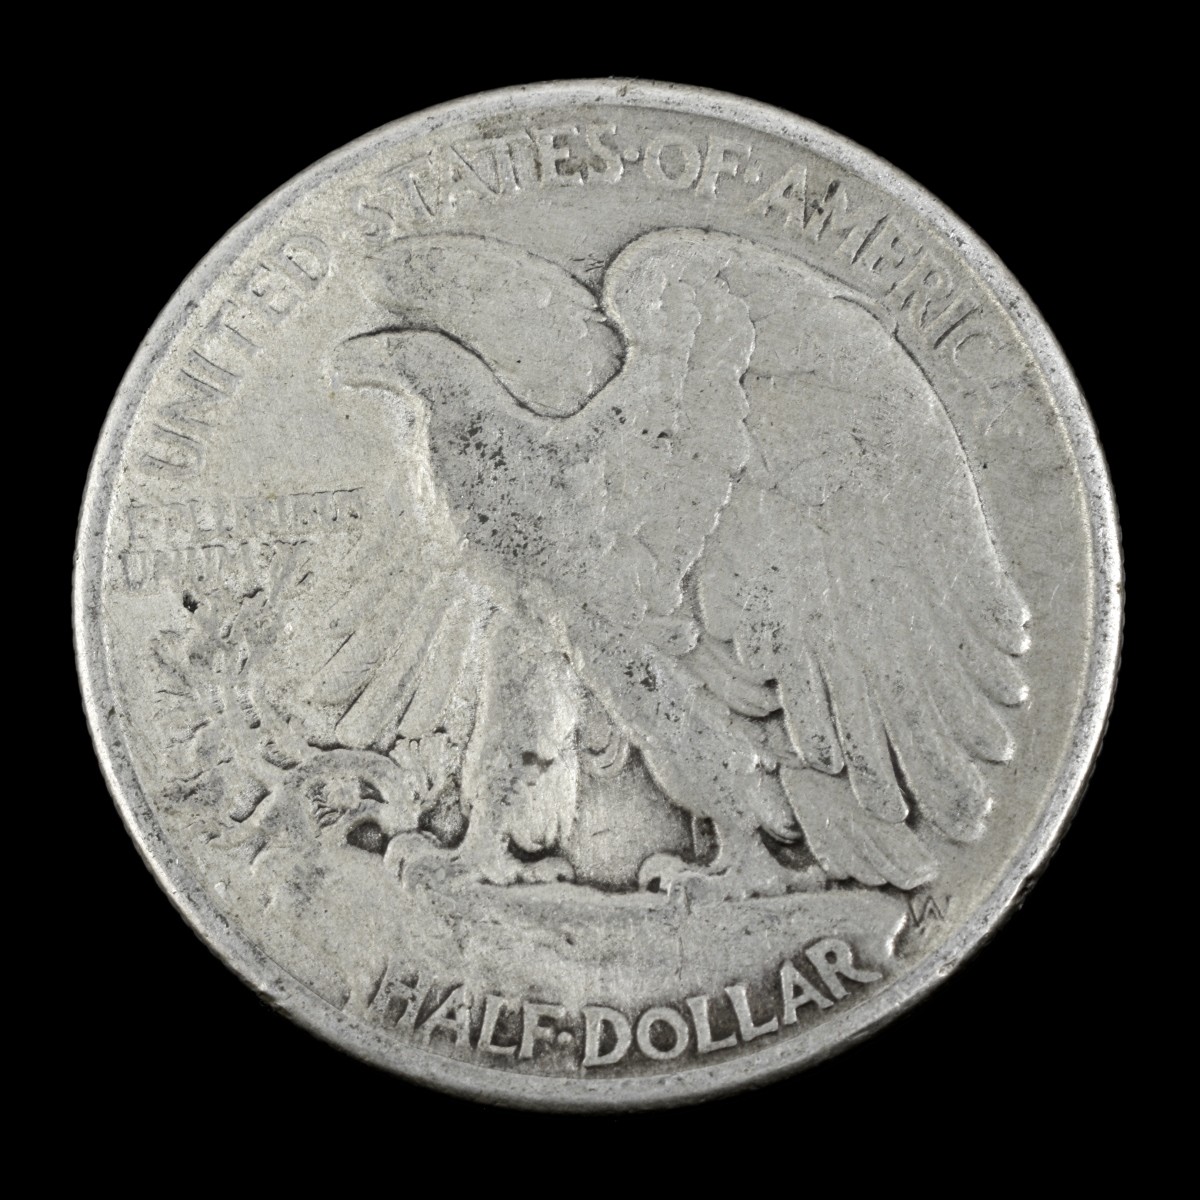 Twenty U.S. Silver Half Dollars